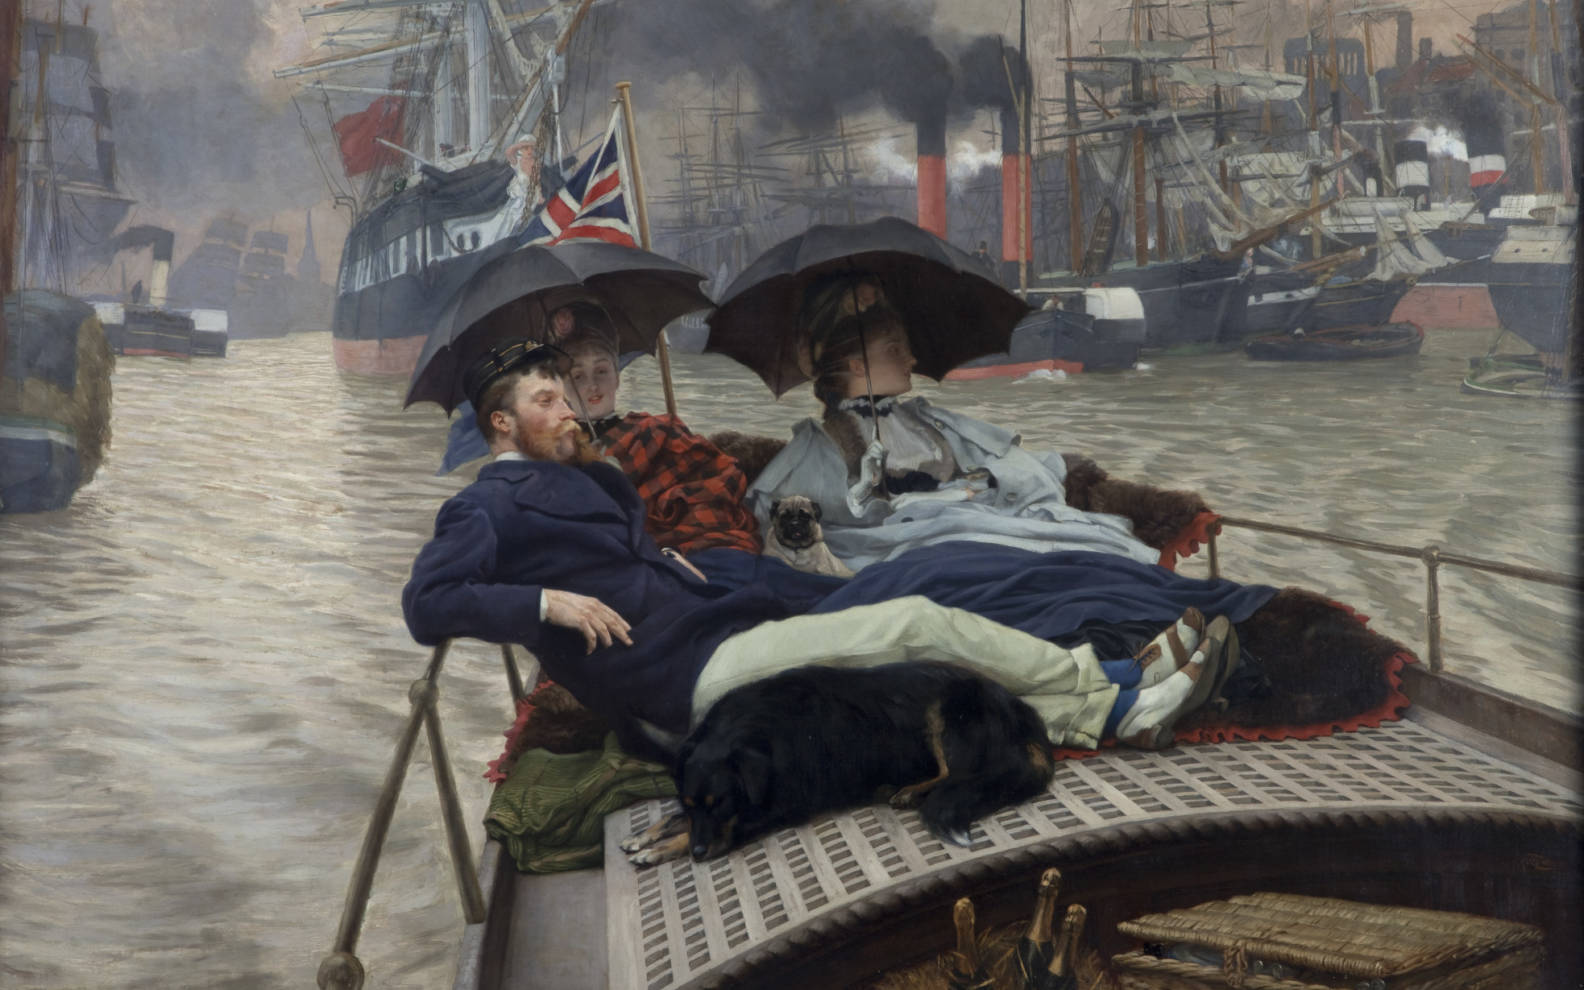 Thames Nehri'nde (İkisinden Biriyle Ne Kadar Mutlu Olabilirdim?) (orig. "On the Thames (How Happy I Could Be with Either?)") by James Tissot - 1876 - 74.8 x 118 cm 